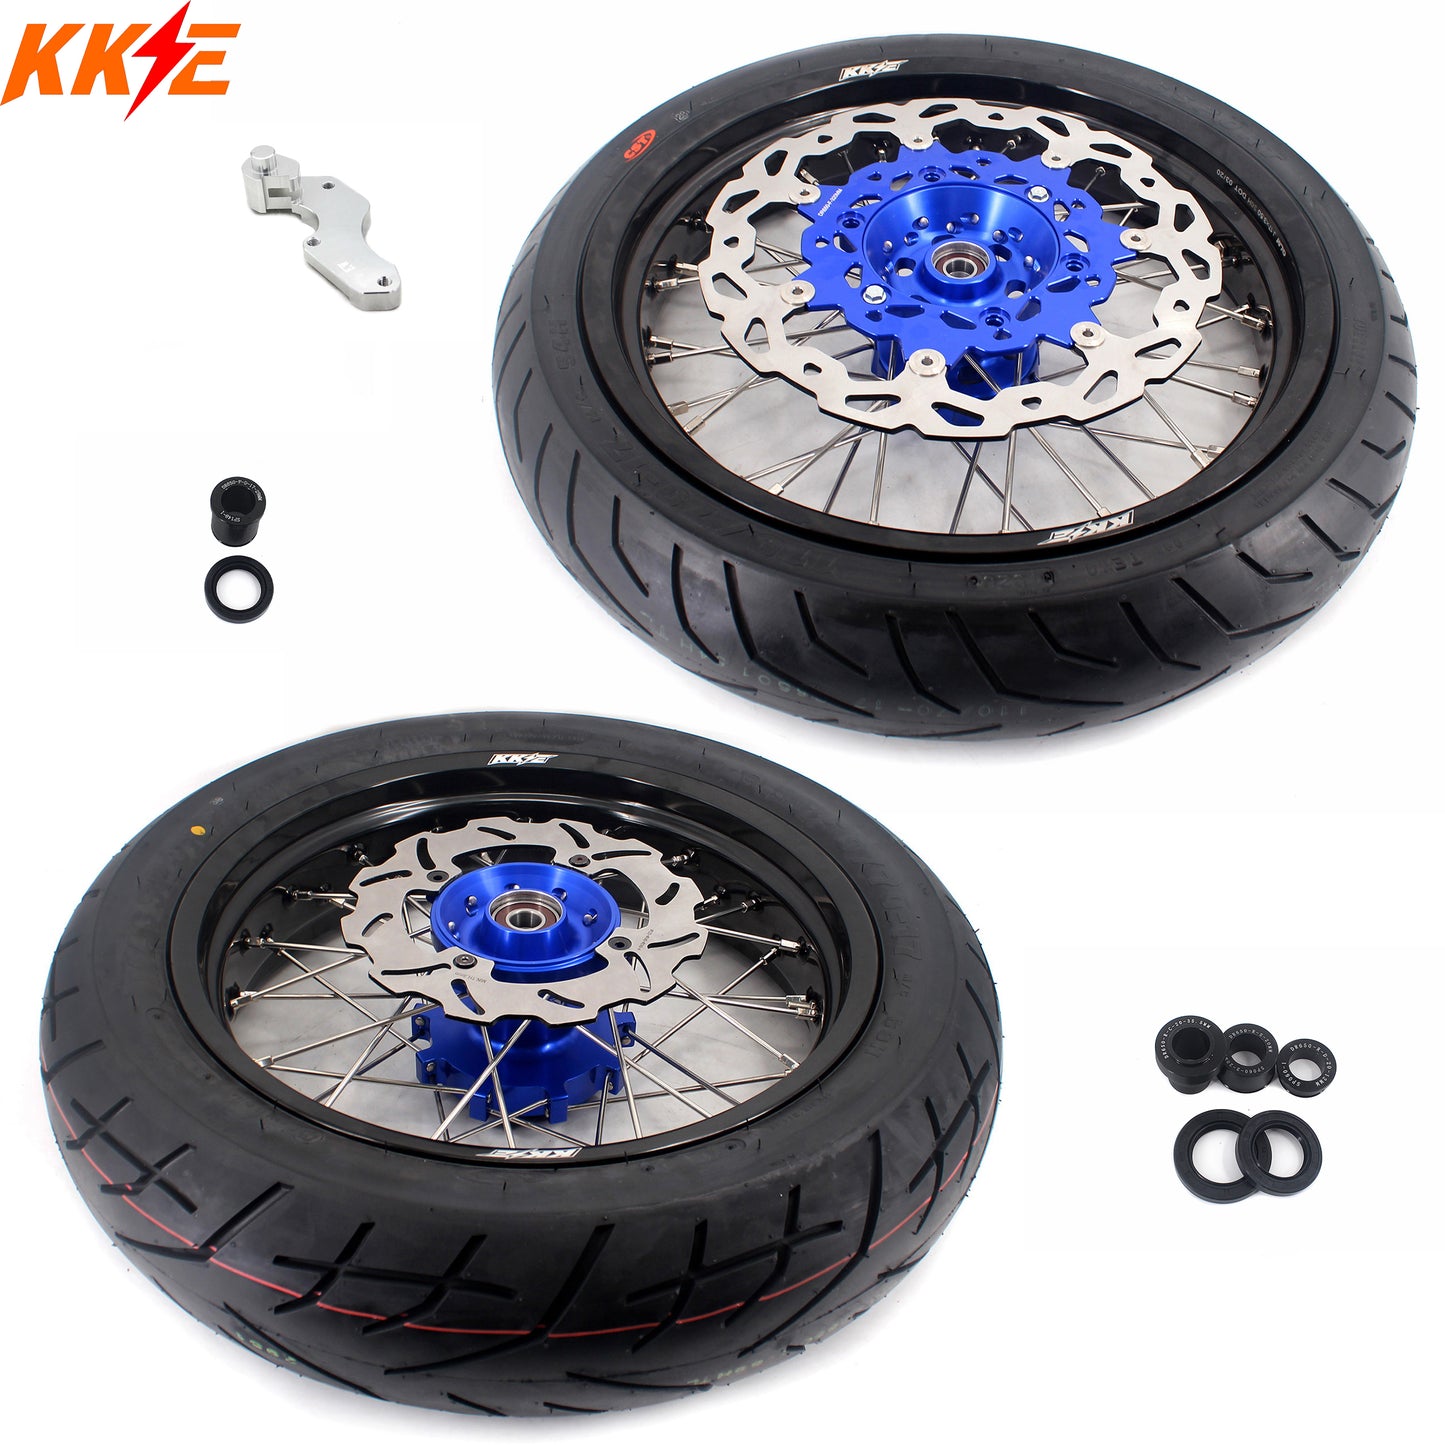 KKE 3.5/4.25*17inch Cush Drive Supermoto Wheels Tires For SUZUKI DR650SE 1996-2021